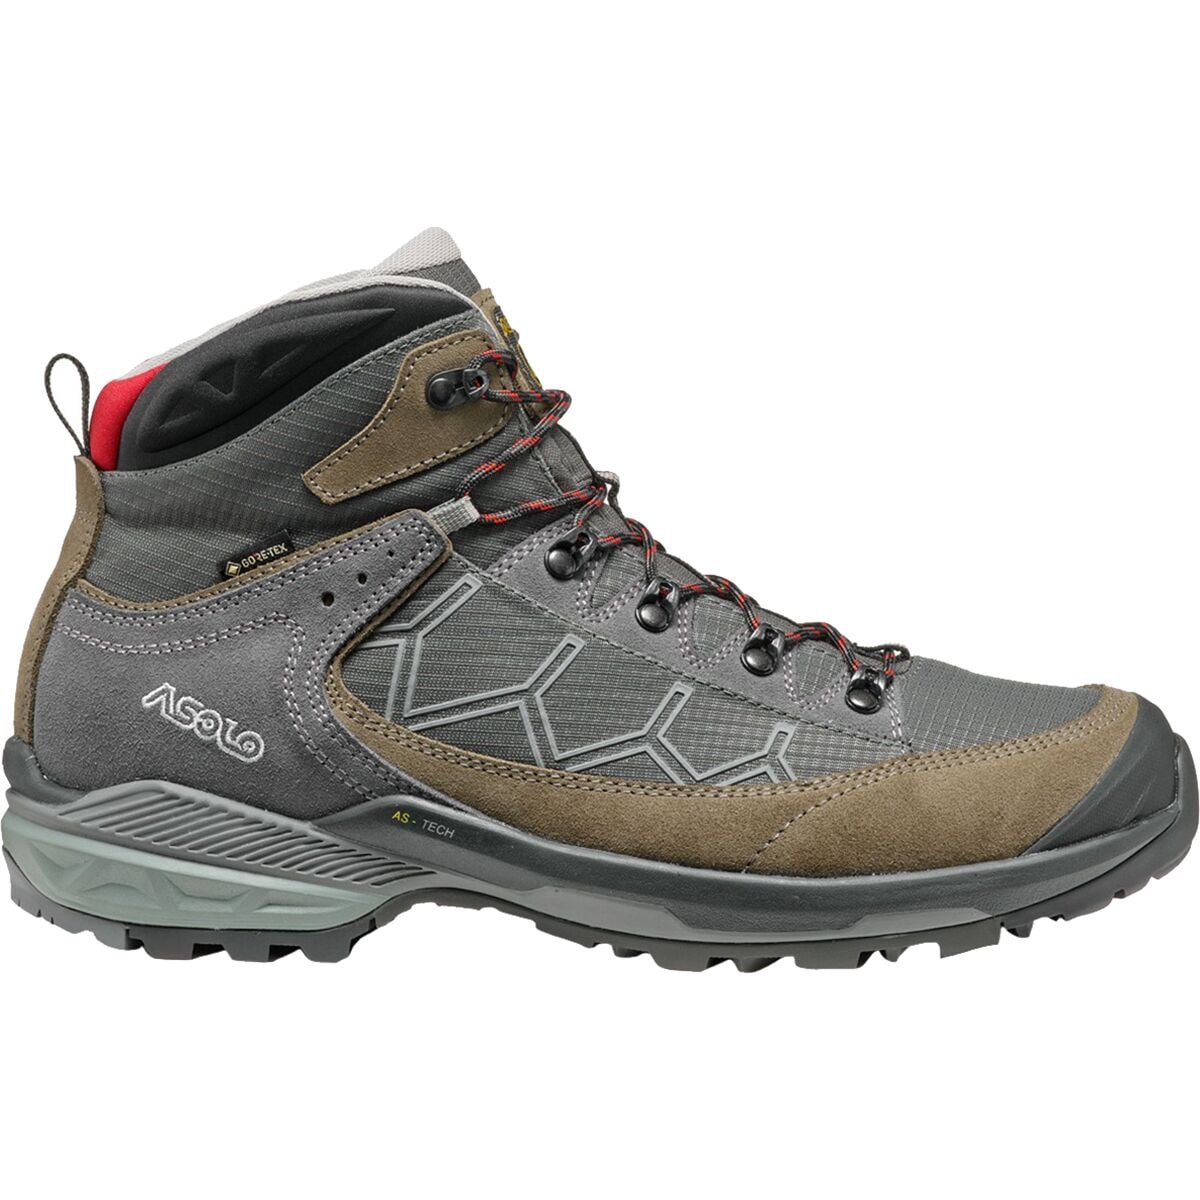 Falcon Evo GV Hiking Boot - Men